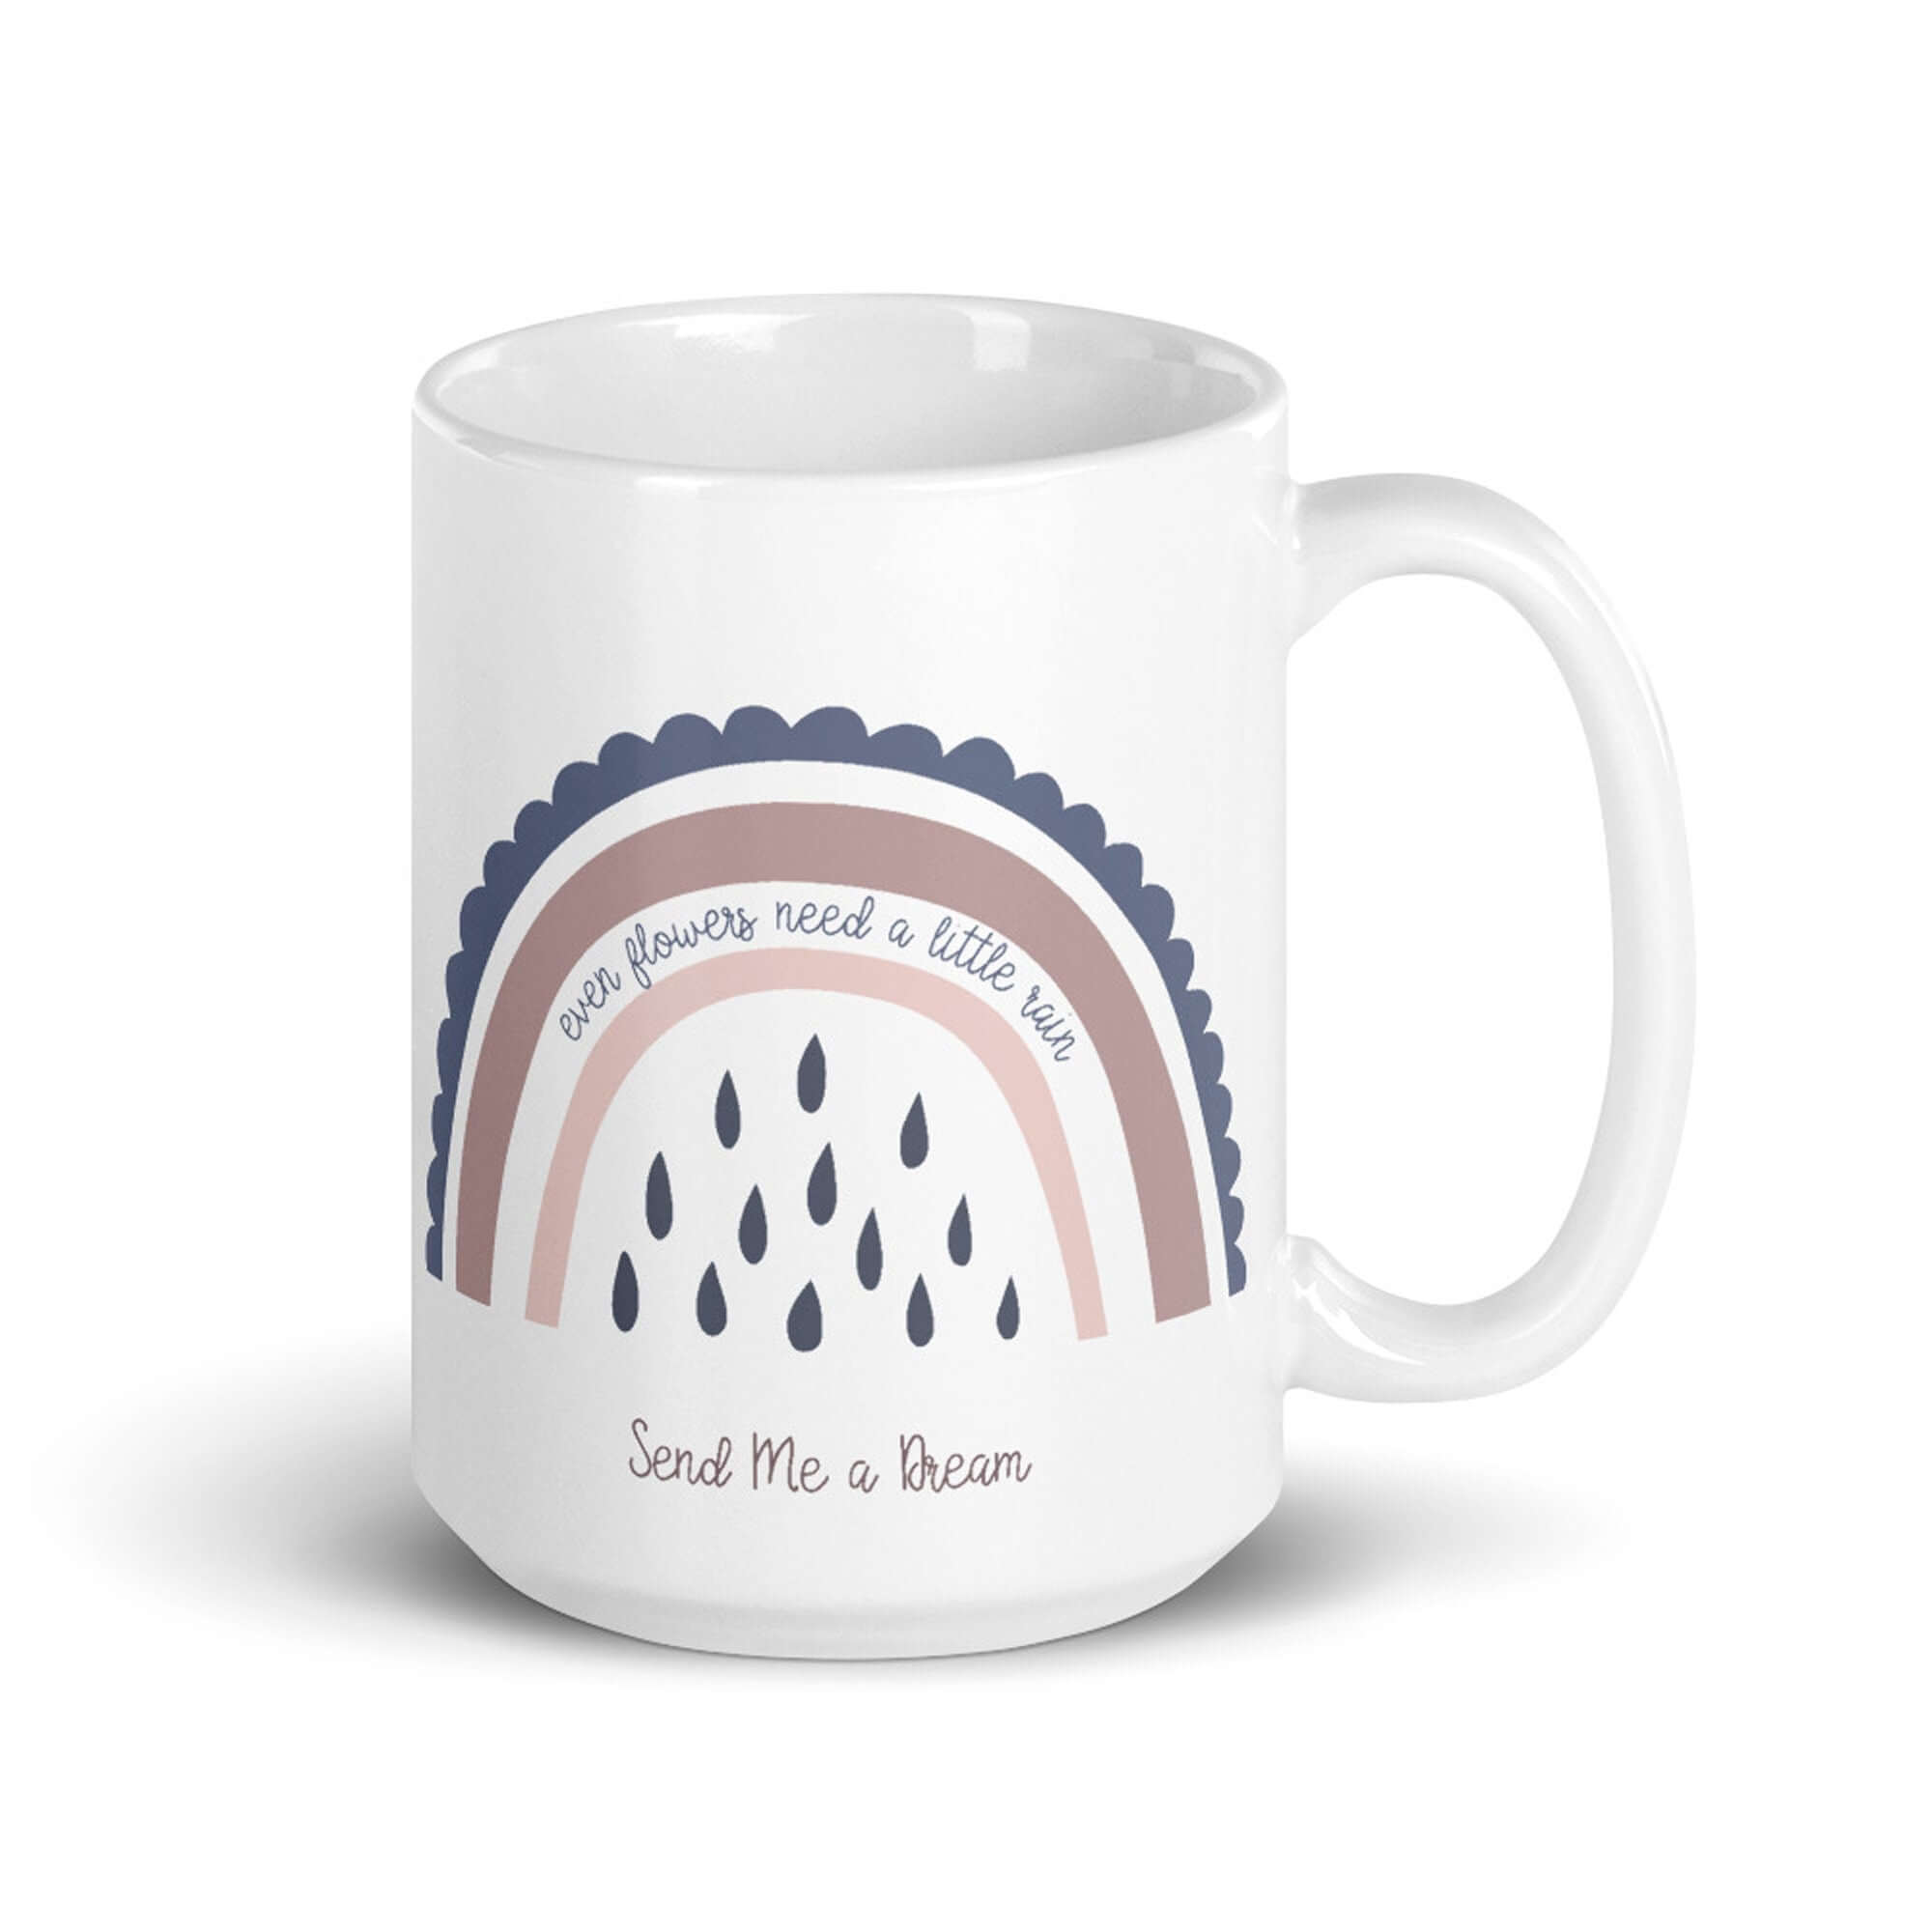 Even Flowers Need Rain Luxe Coffee Mug - Send Me a Dream